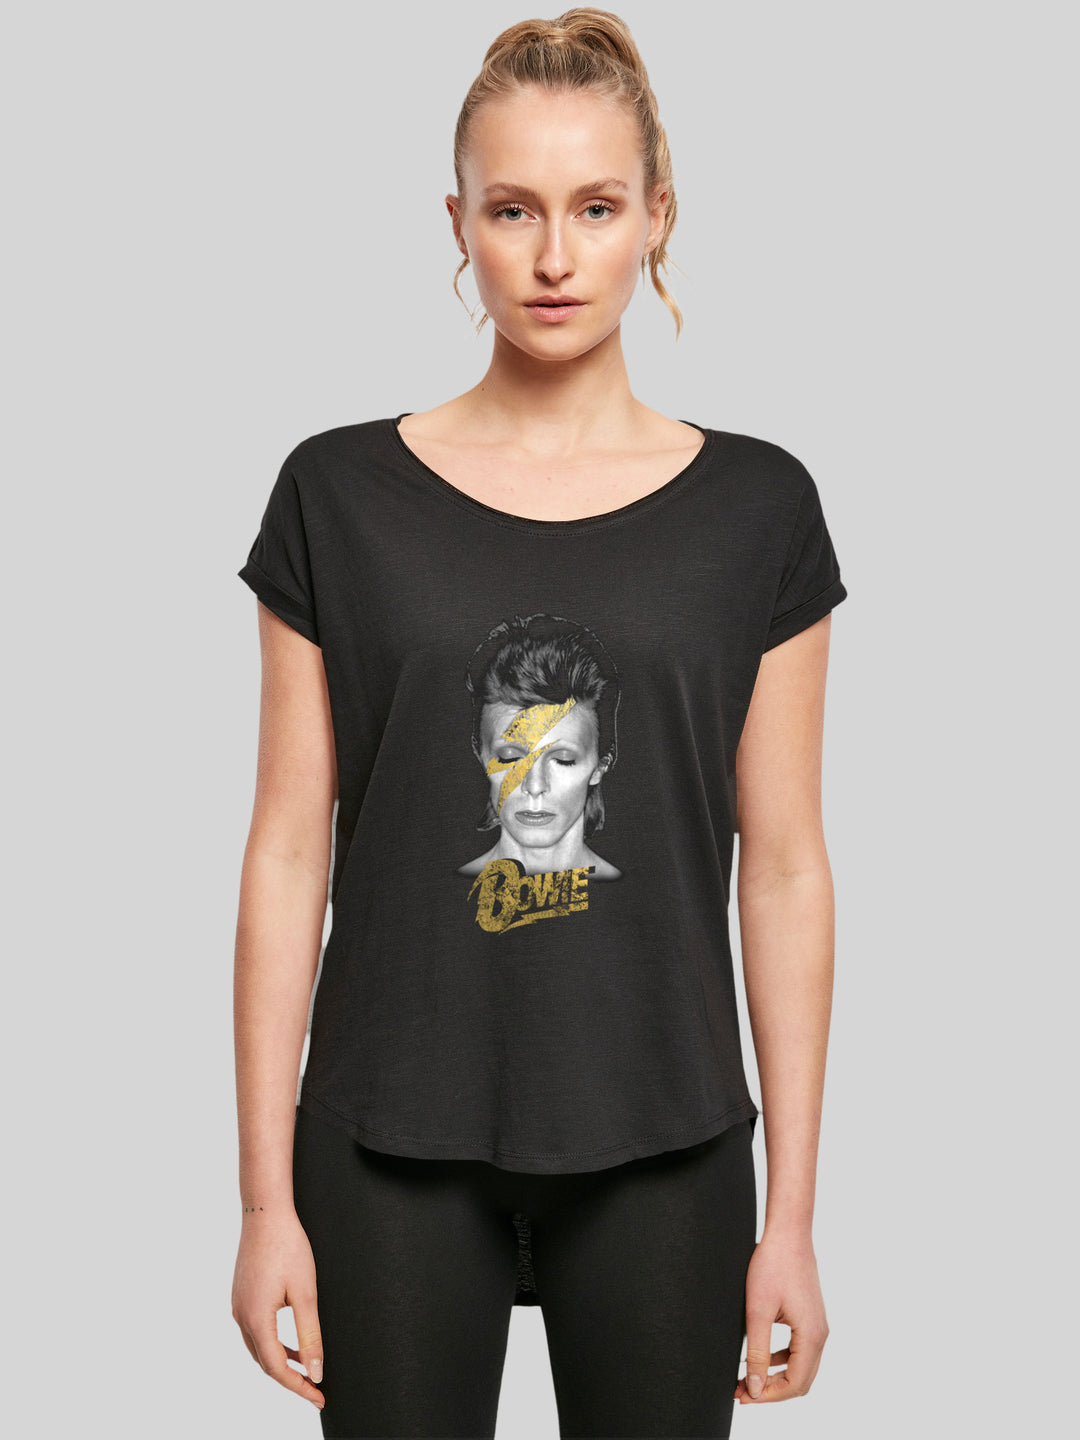 David Bowie T-Shirt | Aladdin Sane Gold Bolt | Premium Long Ladies Tee